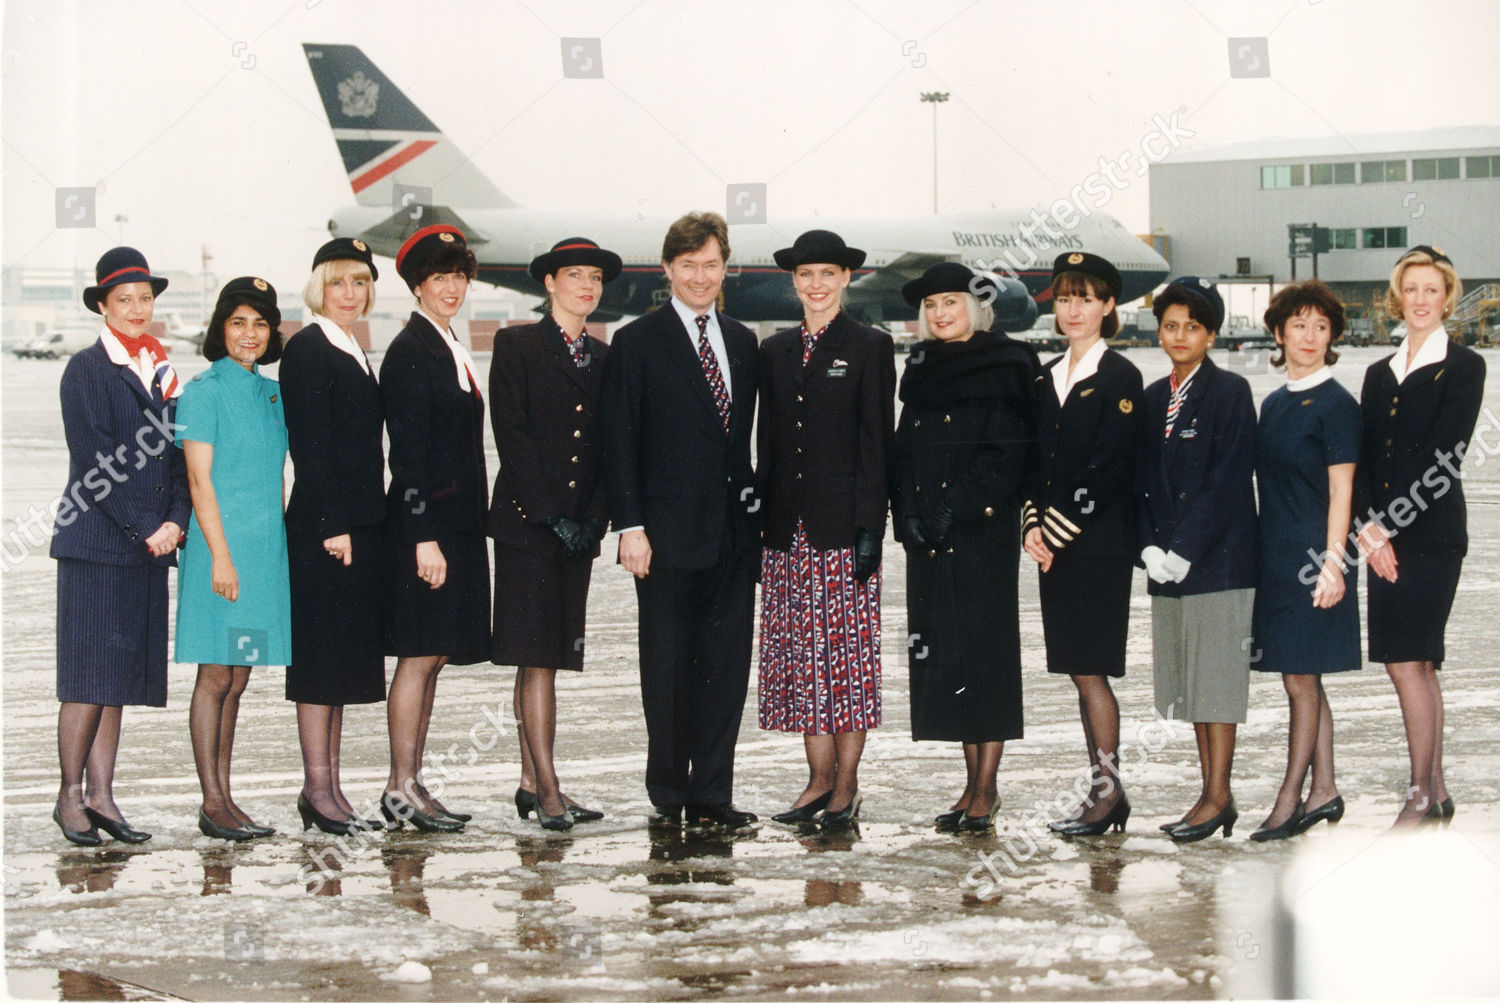 Ba British Airways Stewardesses British Airways Uniforms Editorial Stock Photo Stock Image Shutterstock